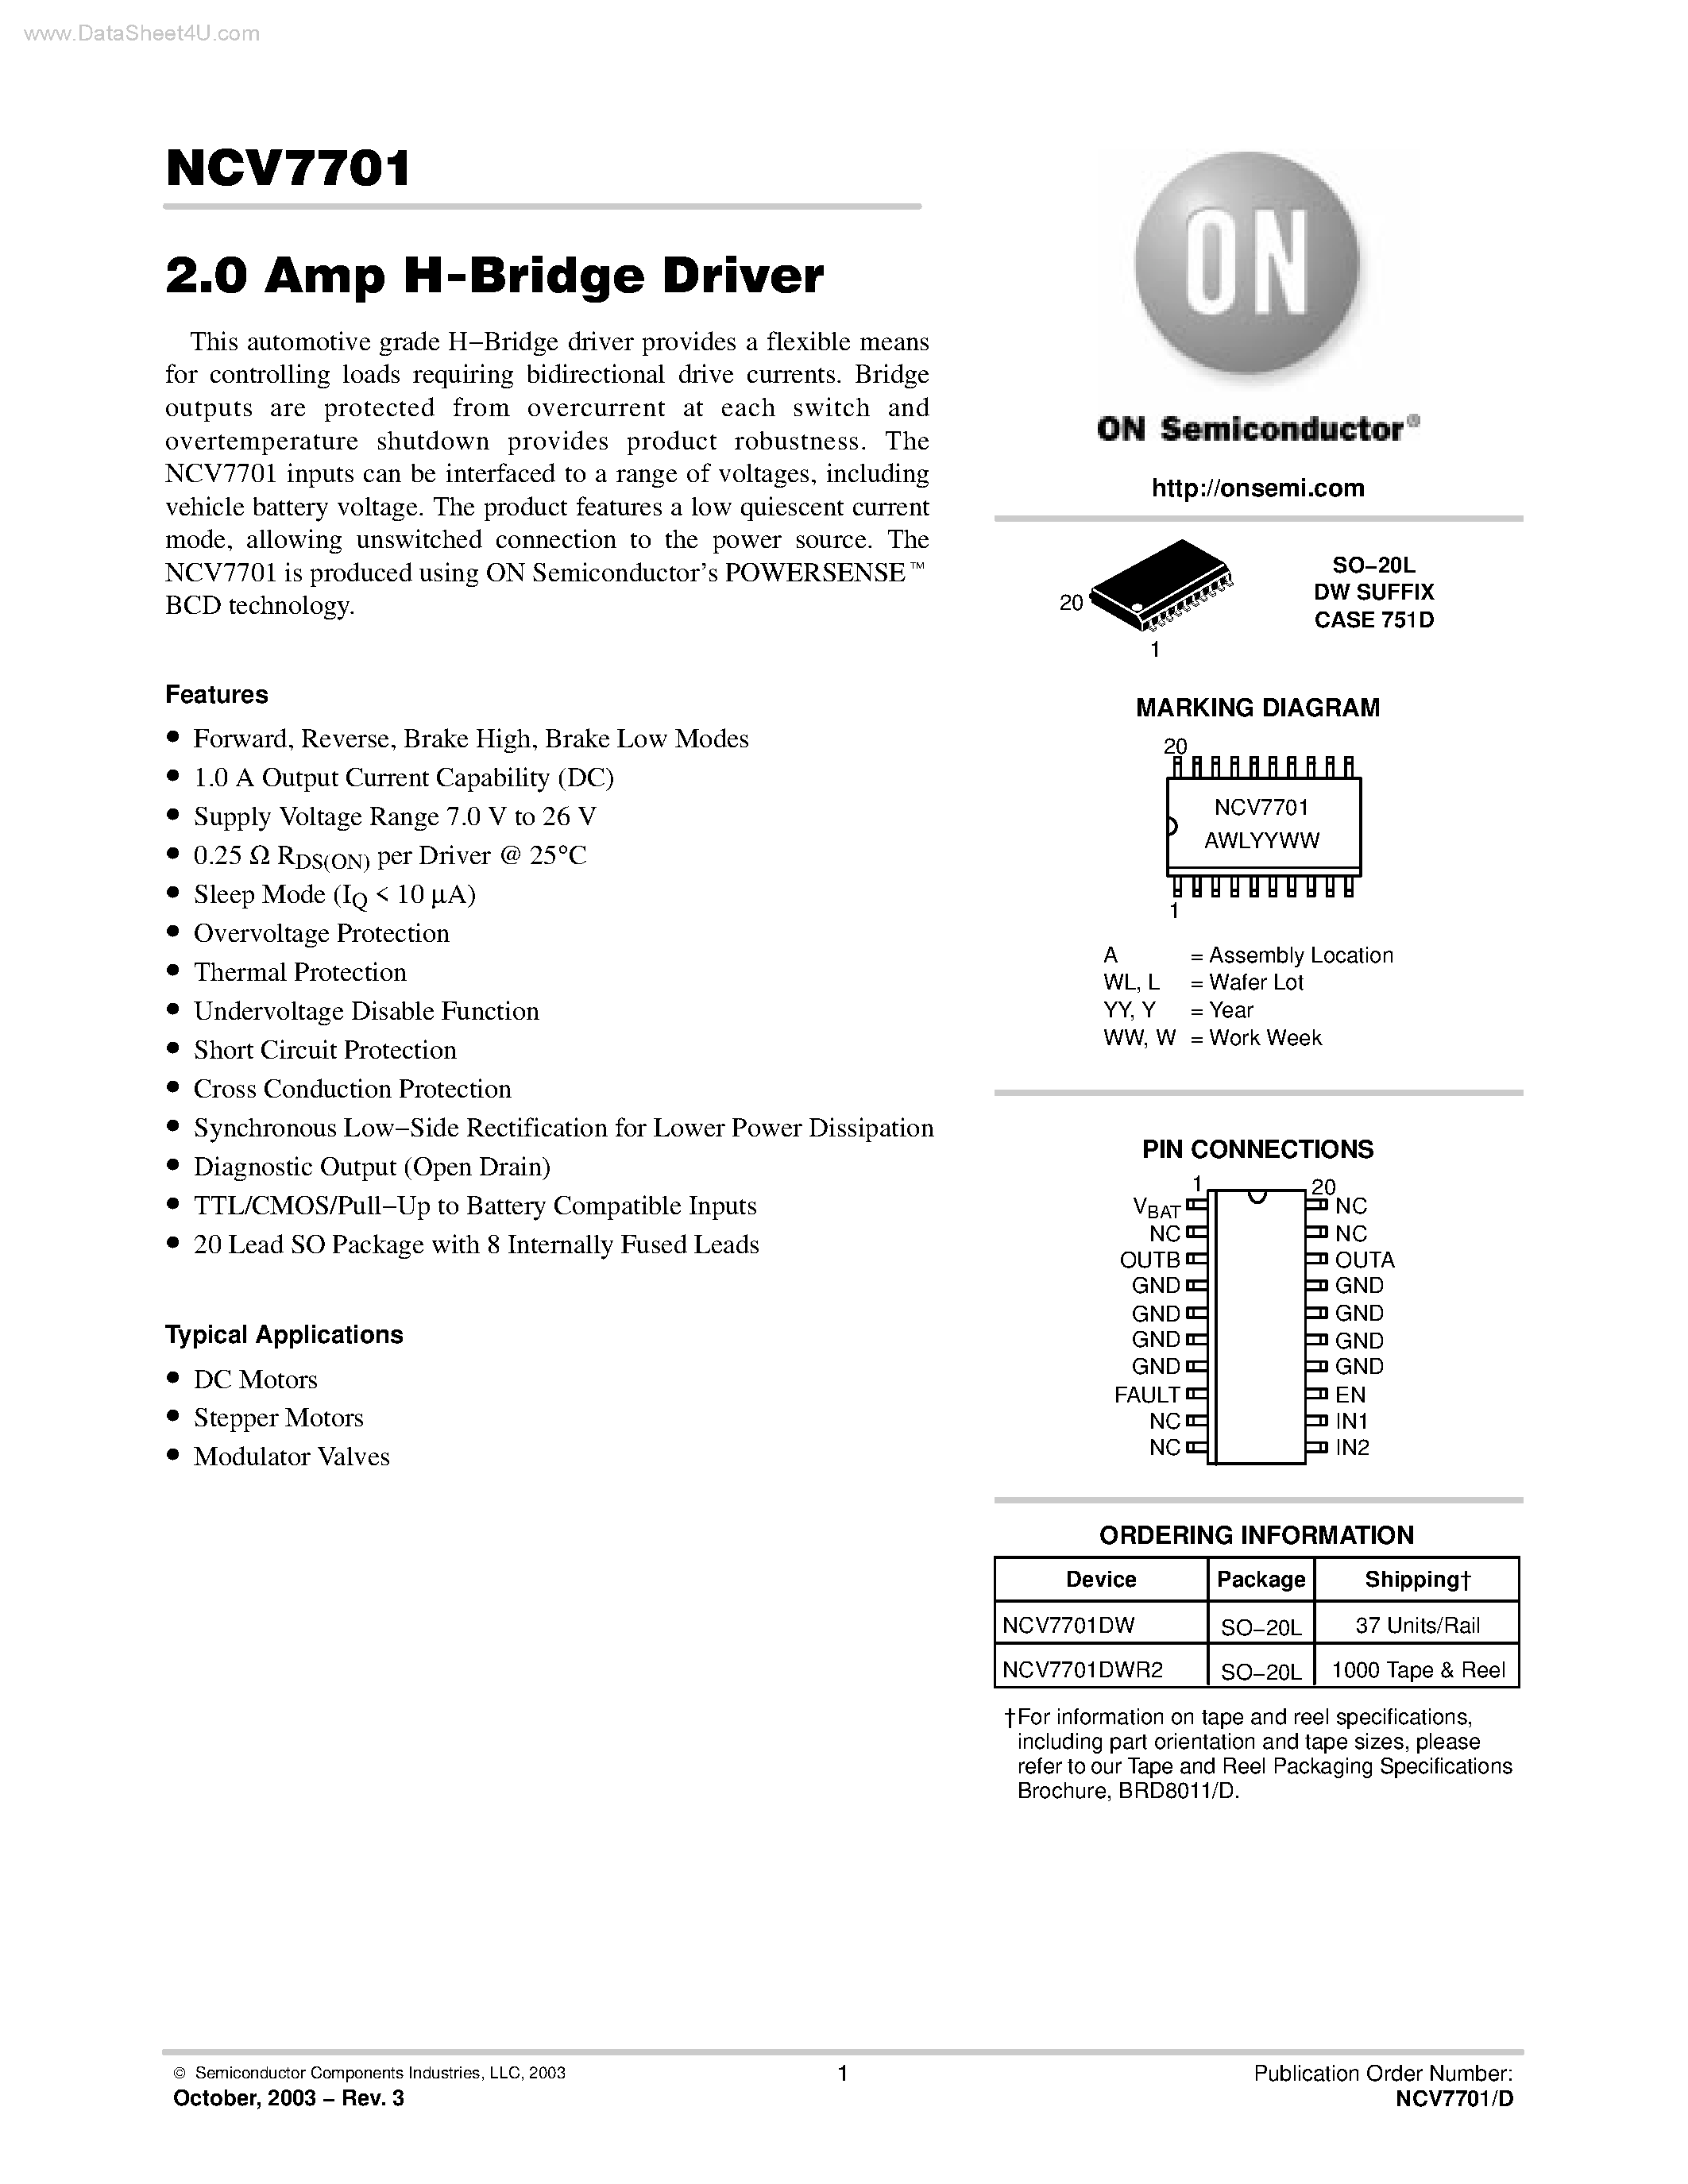 Даташит NCV7701 - 2.0 Amp H-Bridge Driver страница 1